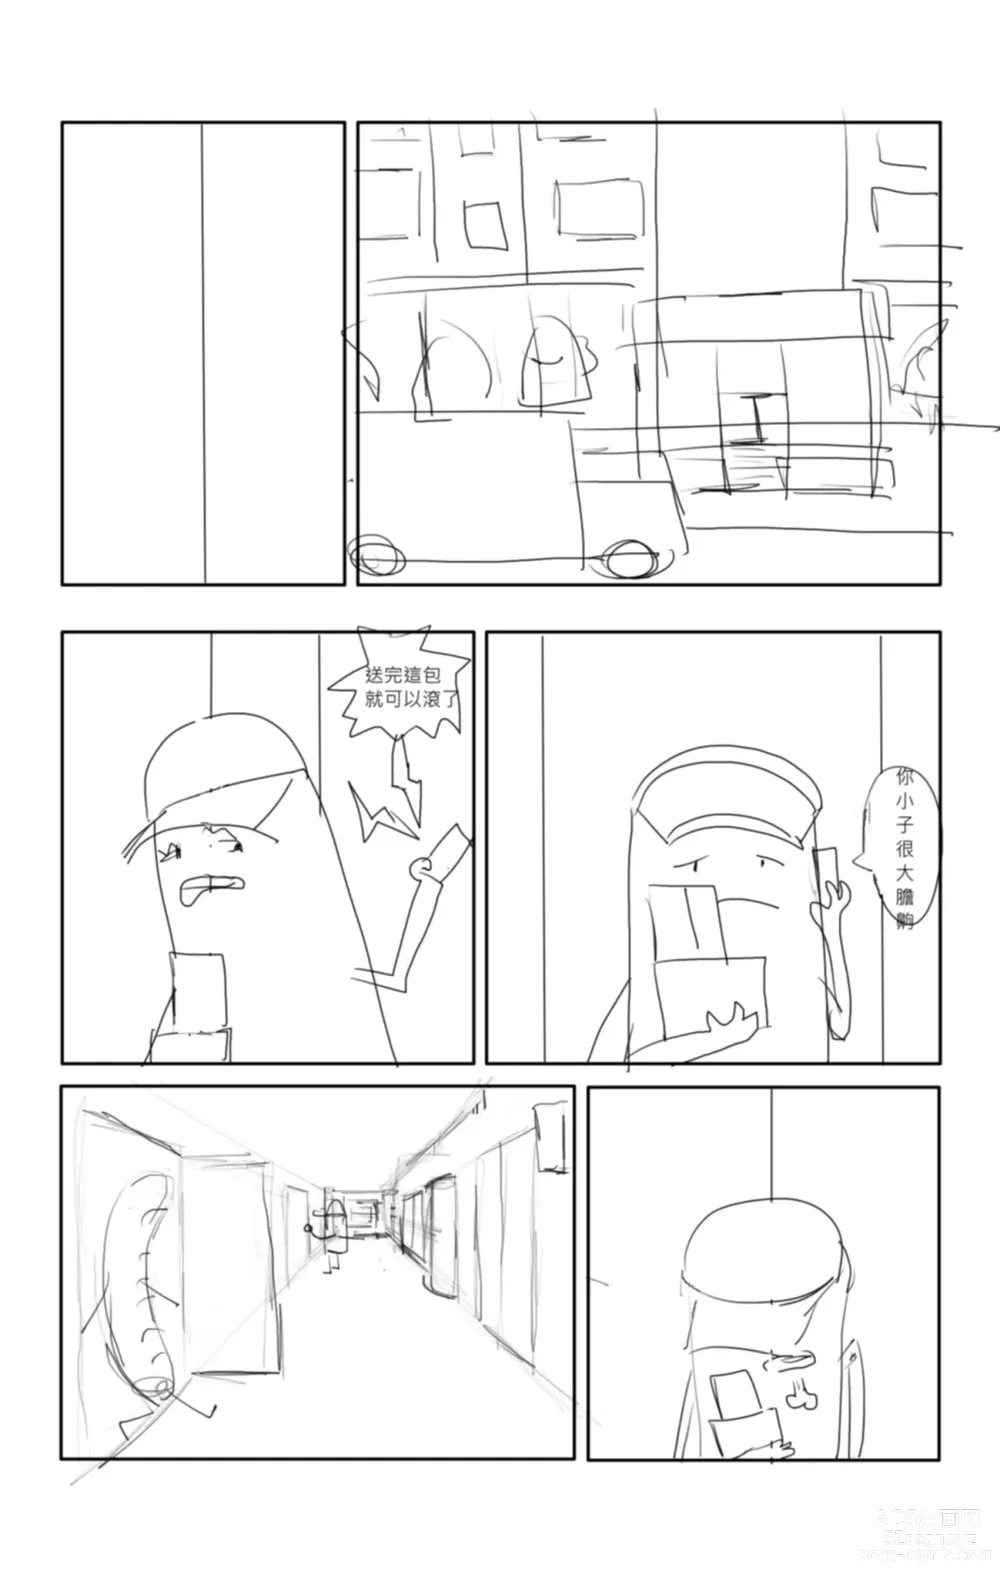 Page 1 of manga keatchup